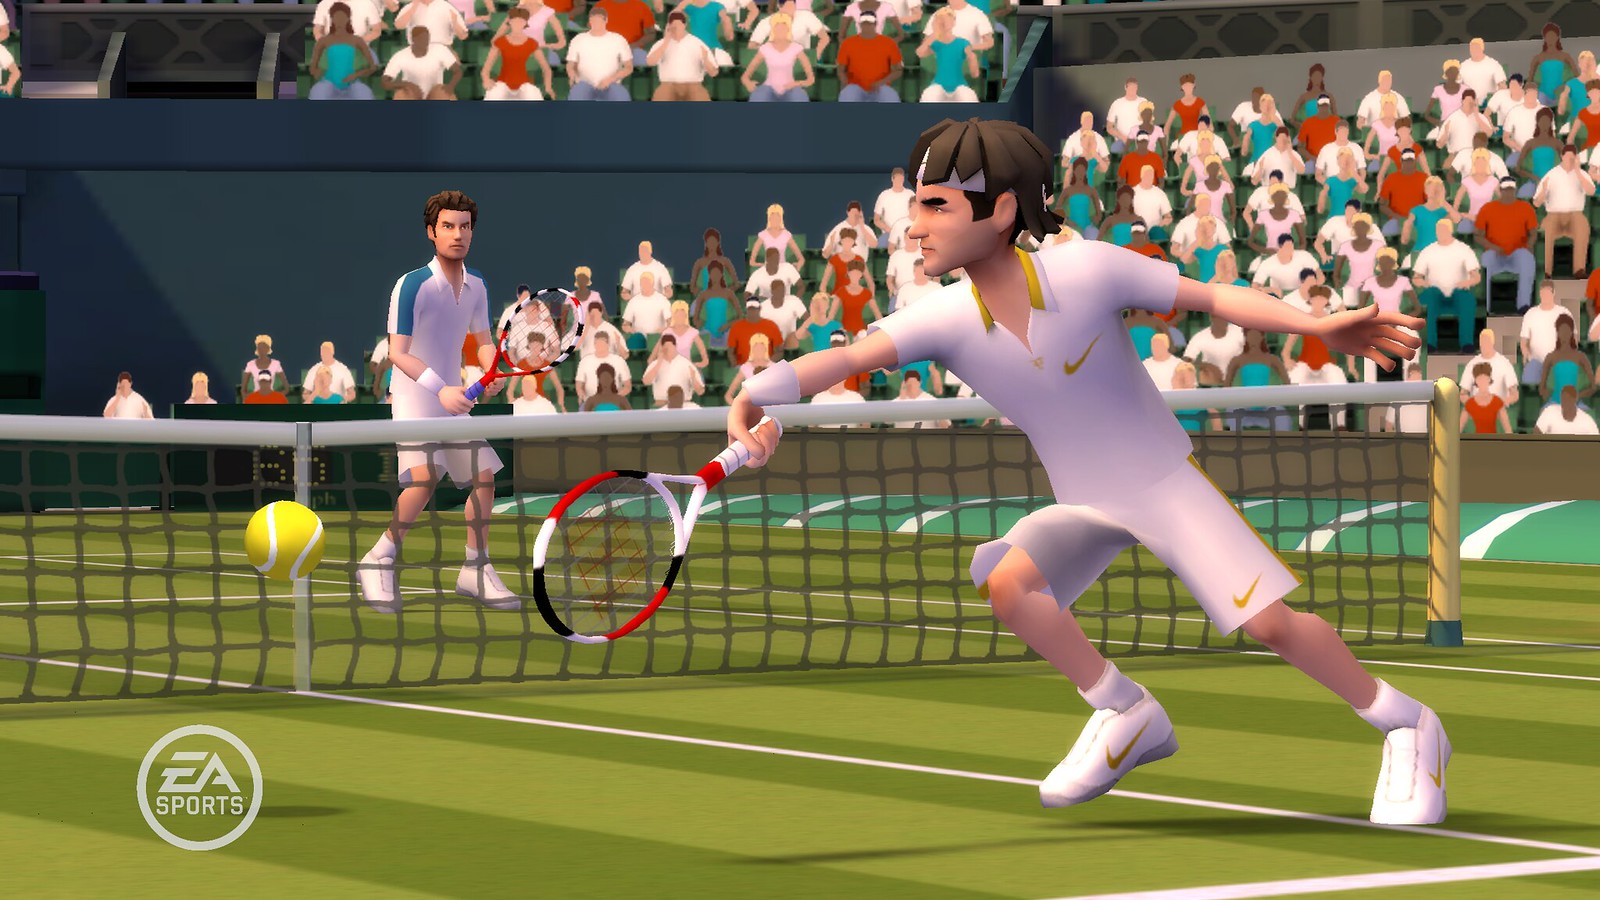 В каких играх есть турниры. Игра в теннис. Гранд-слэм теннис. Wii Tennis. EA Sports Grand Slam Tennis.